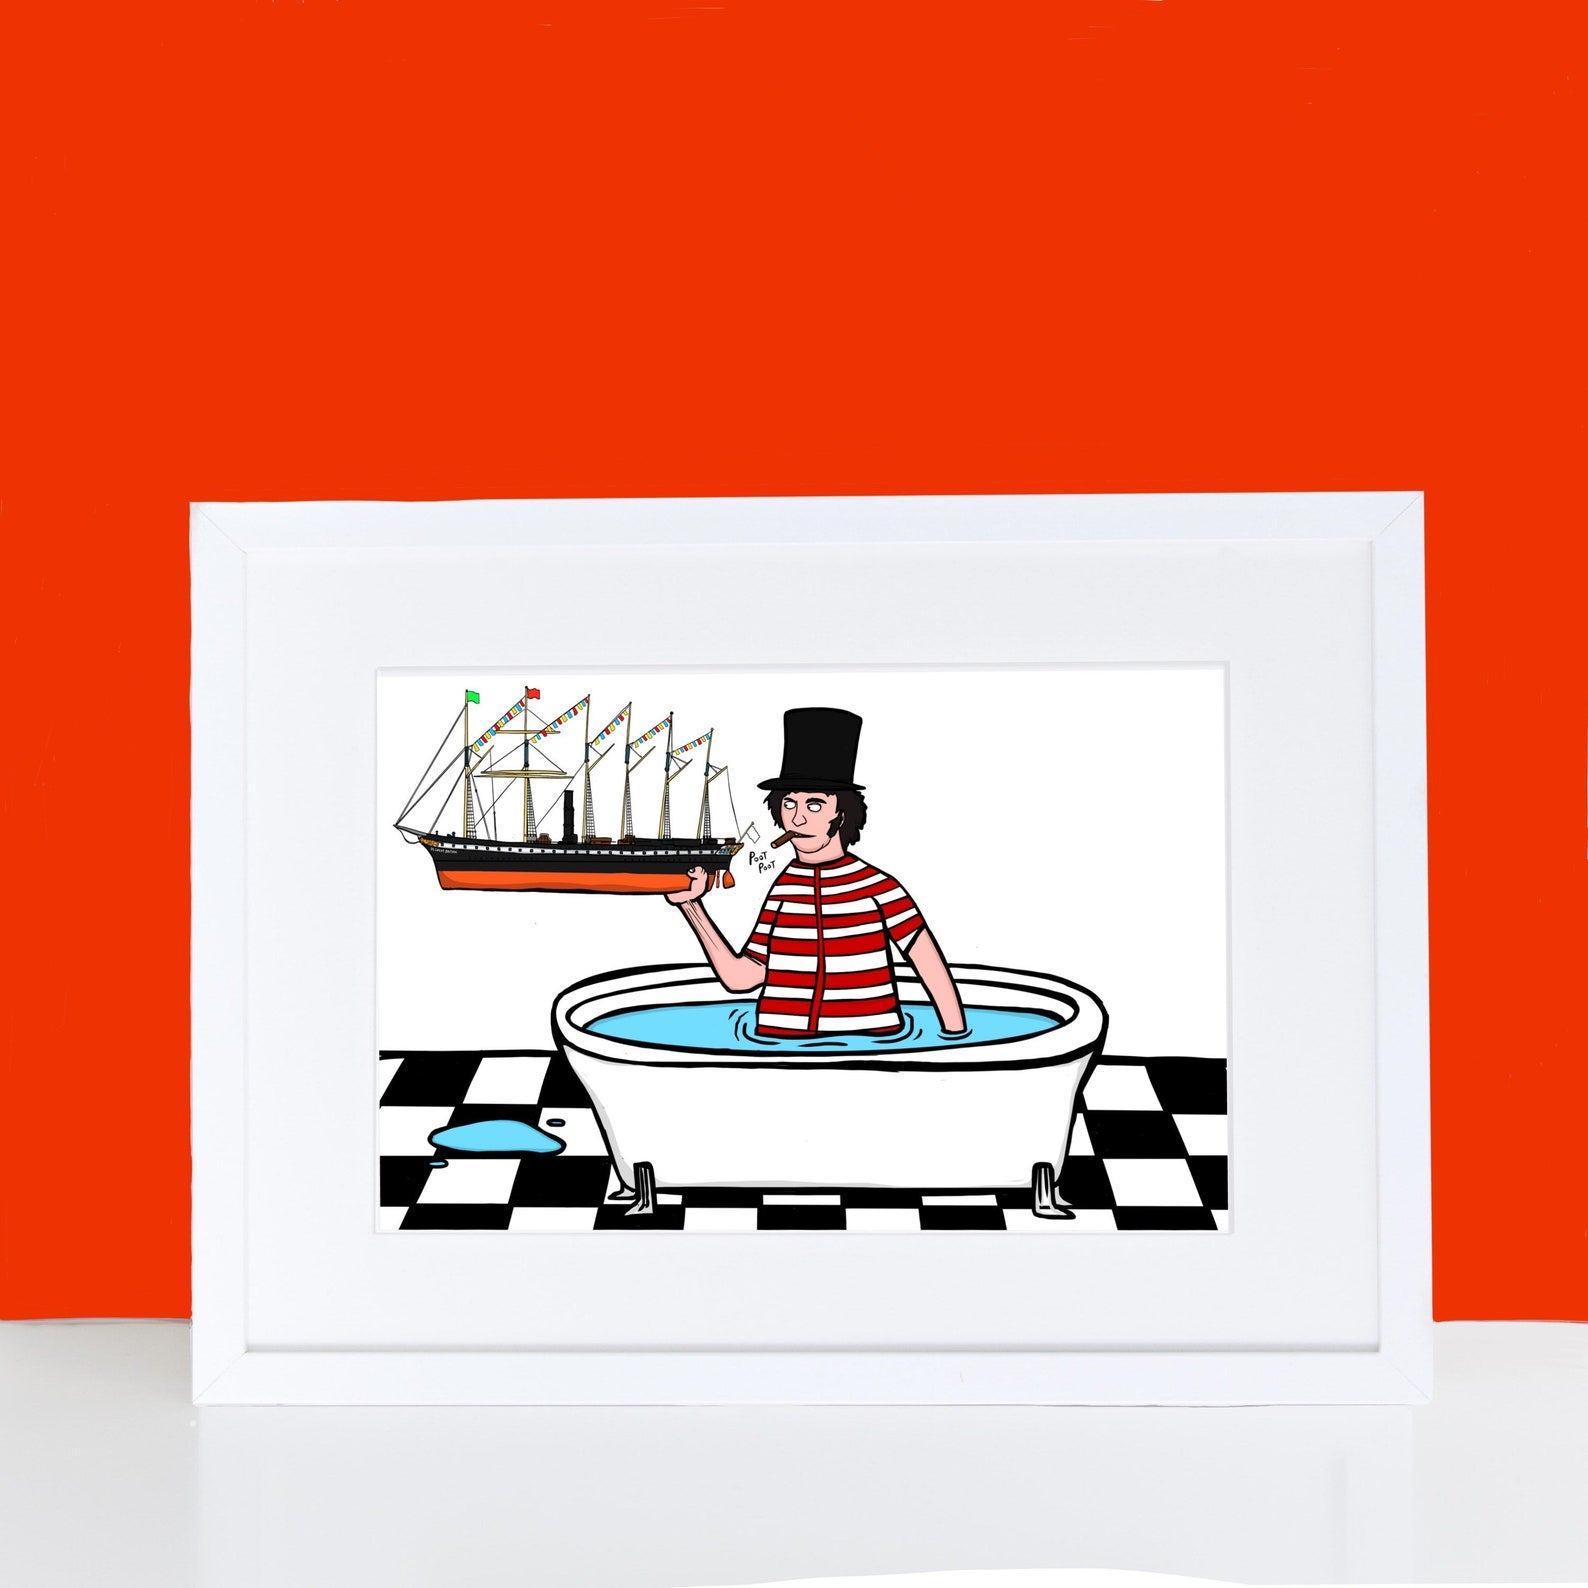 Isambard Kingdom Brunel playing with SS Great Britain in a Bath Tub, alternative Bristol art print